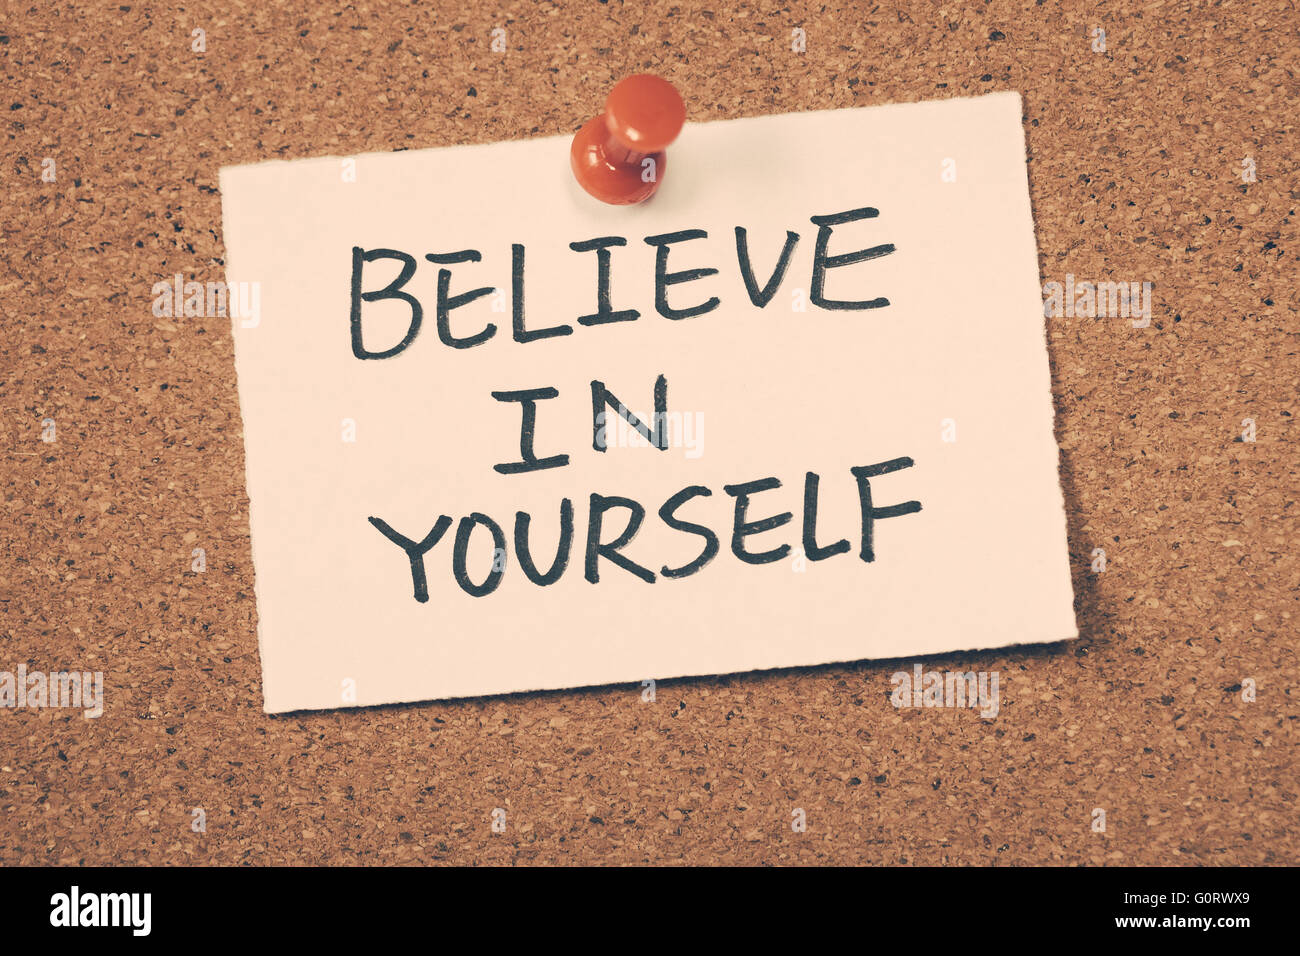 believe in yourself Stock Photo